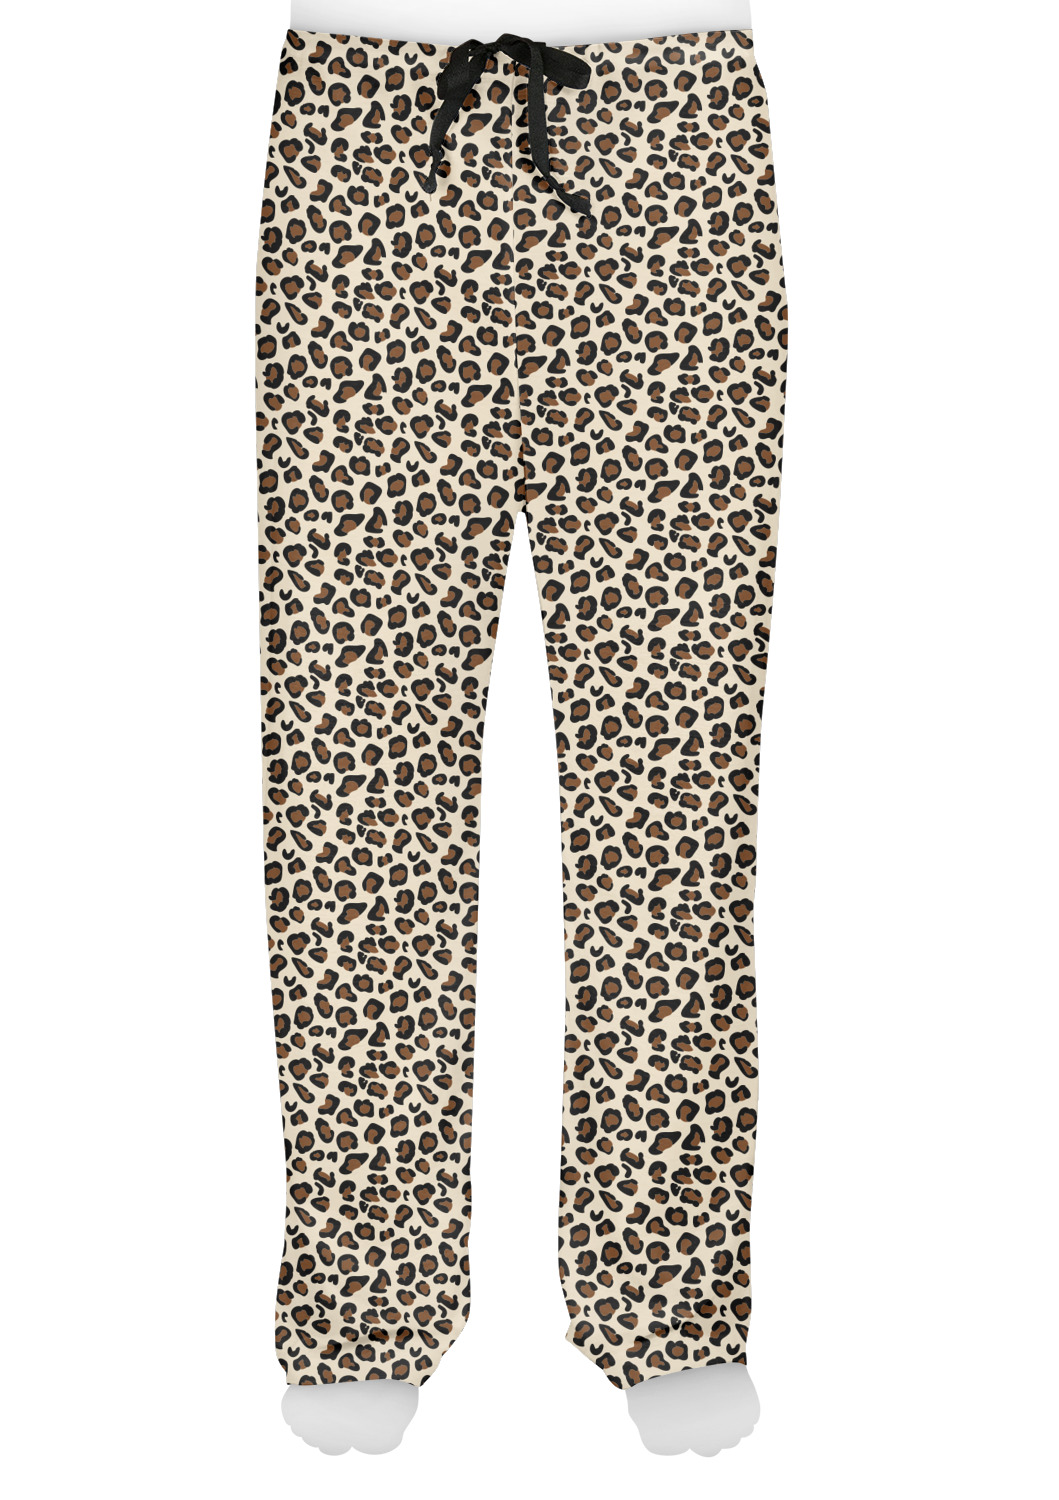 Leopard Print Mens Pajama Pants (Personalized) - YouCustomizeIt